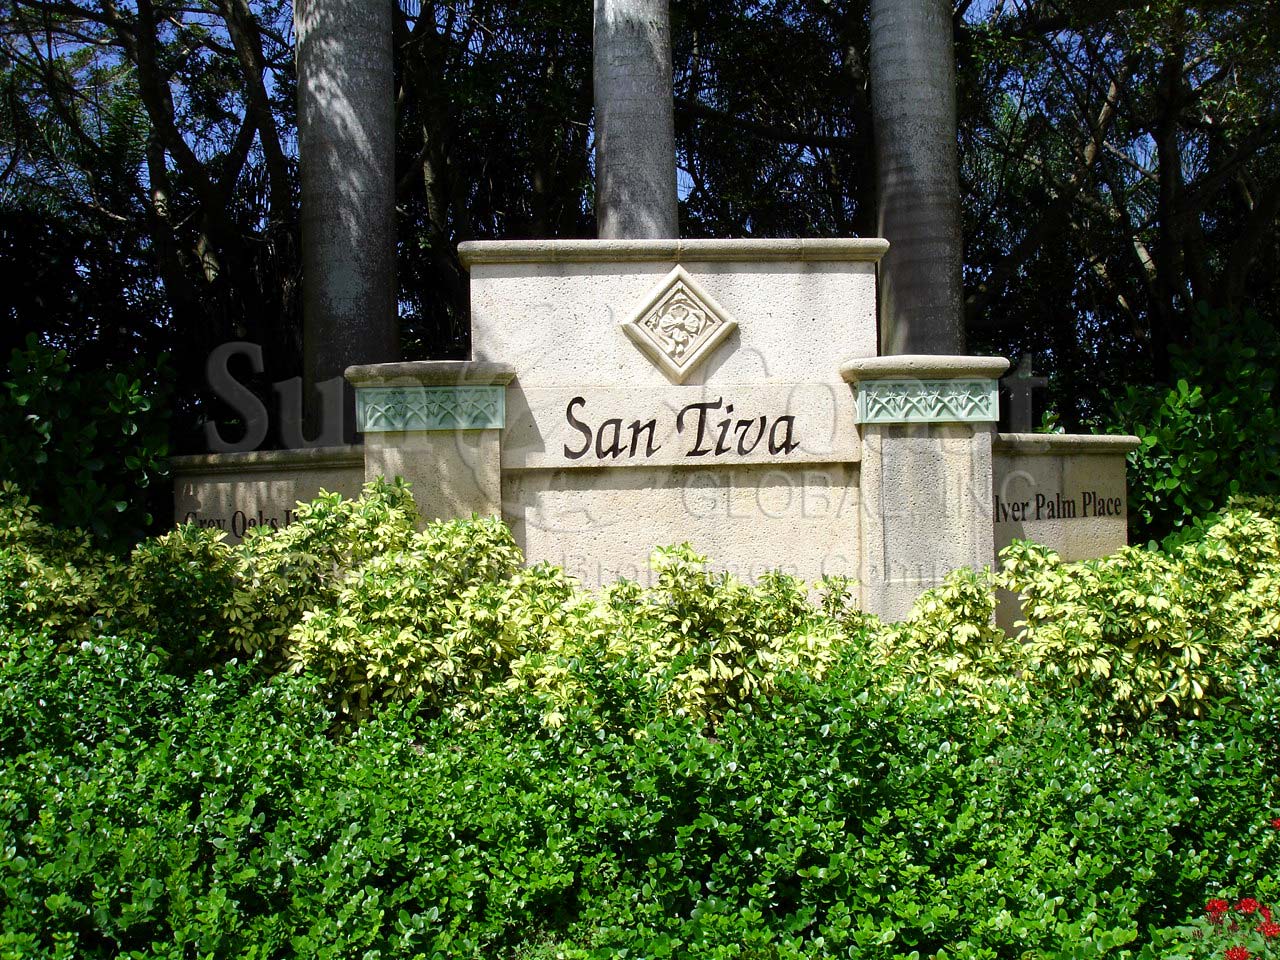 San Tiva signage